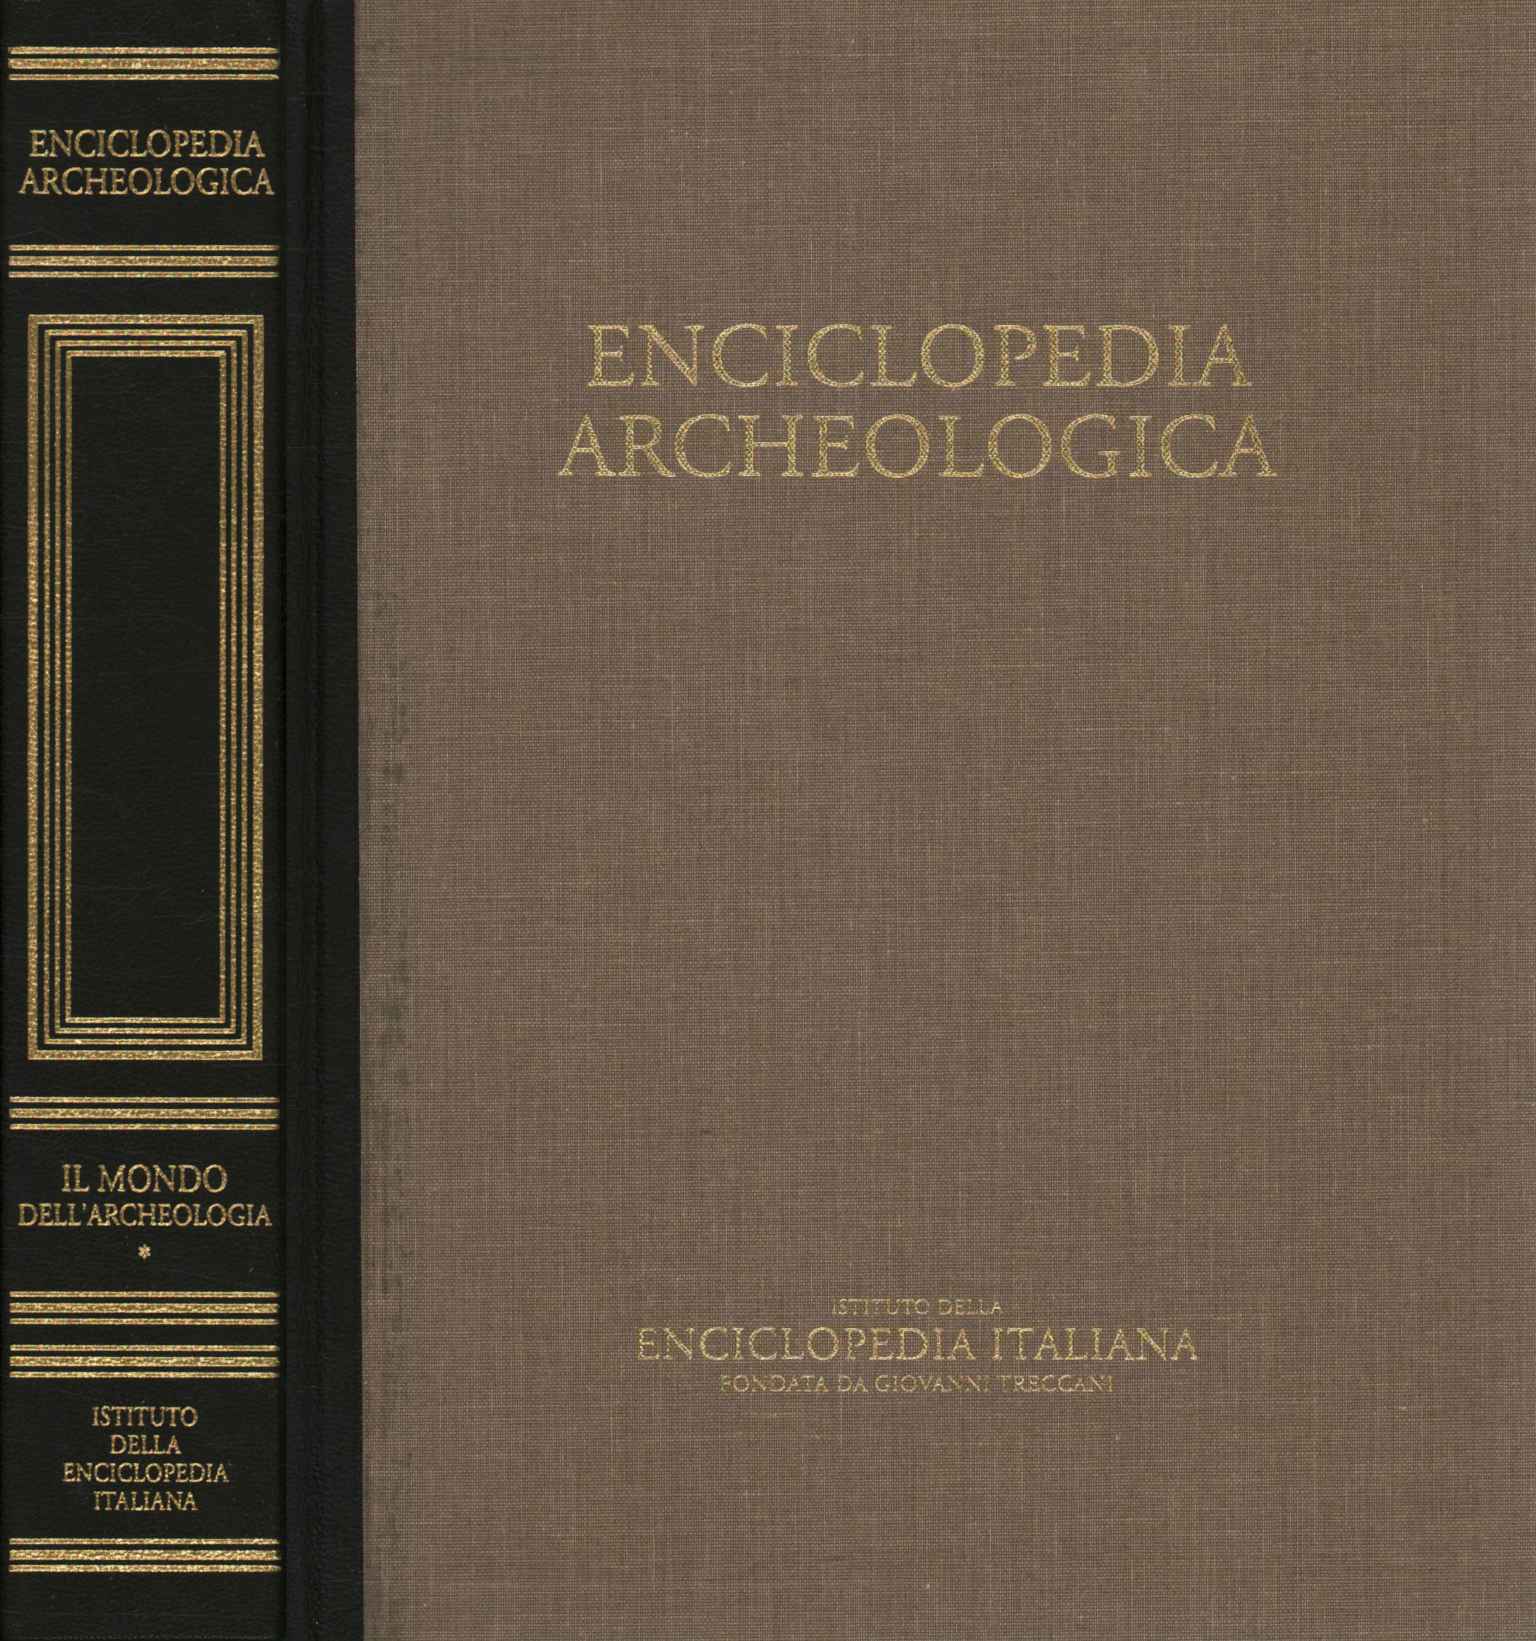 Archaeological encyclopedia (Volume I),Archaeological encyclopedia. The world of 0a